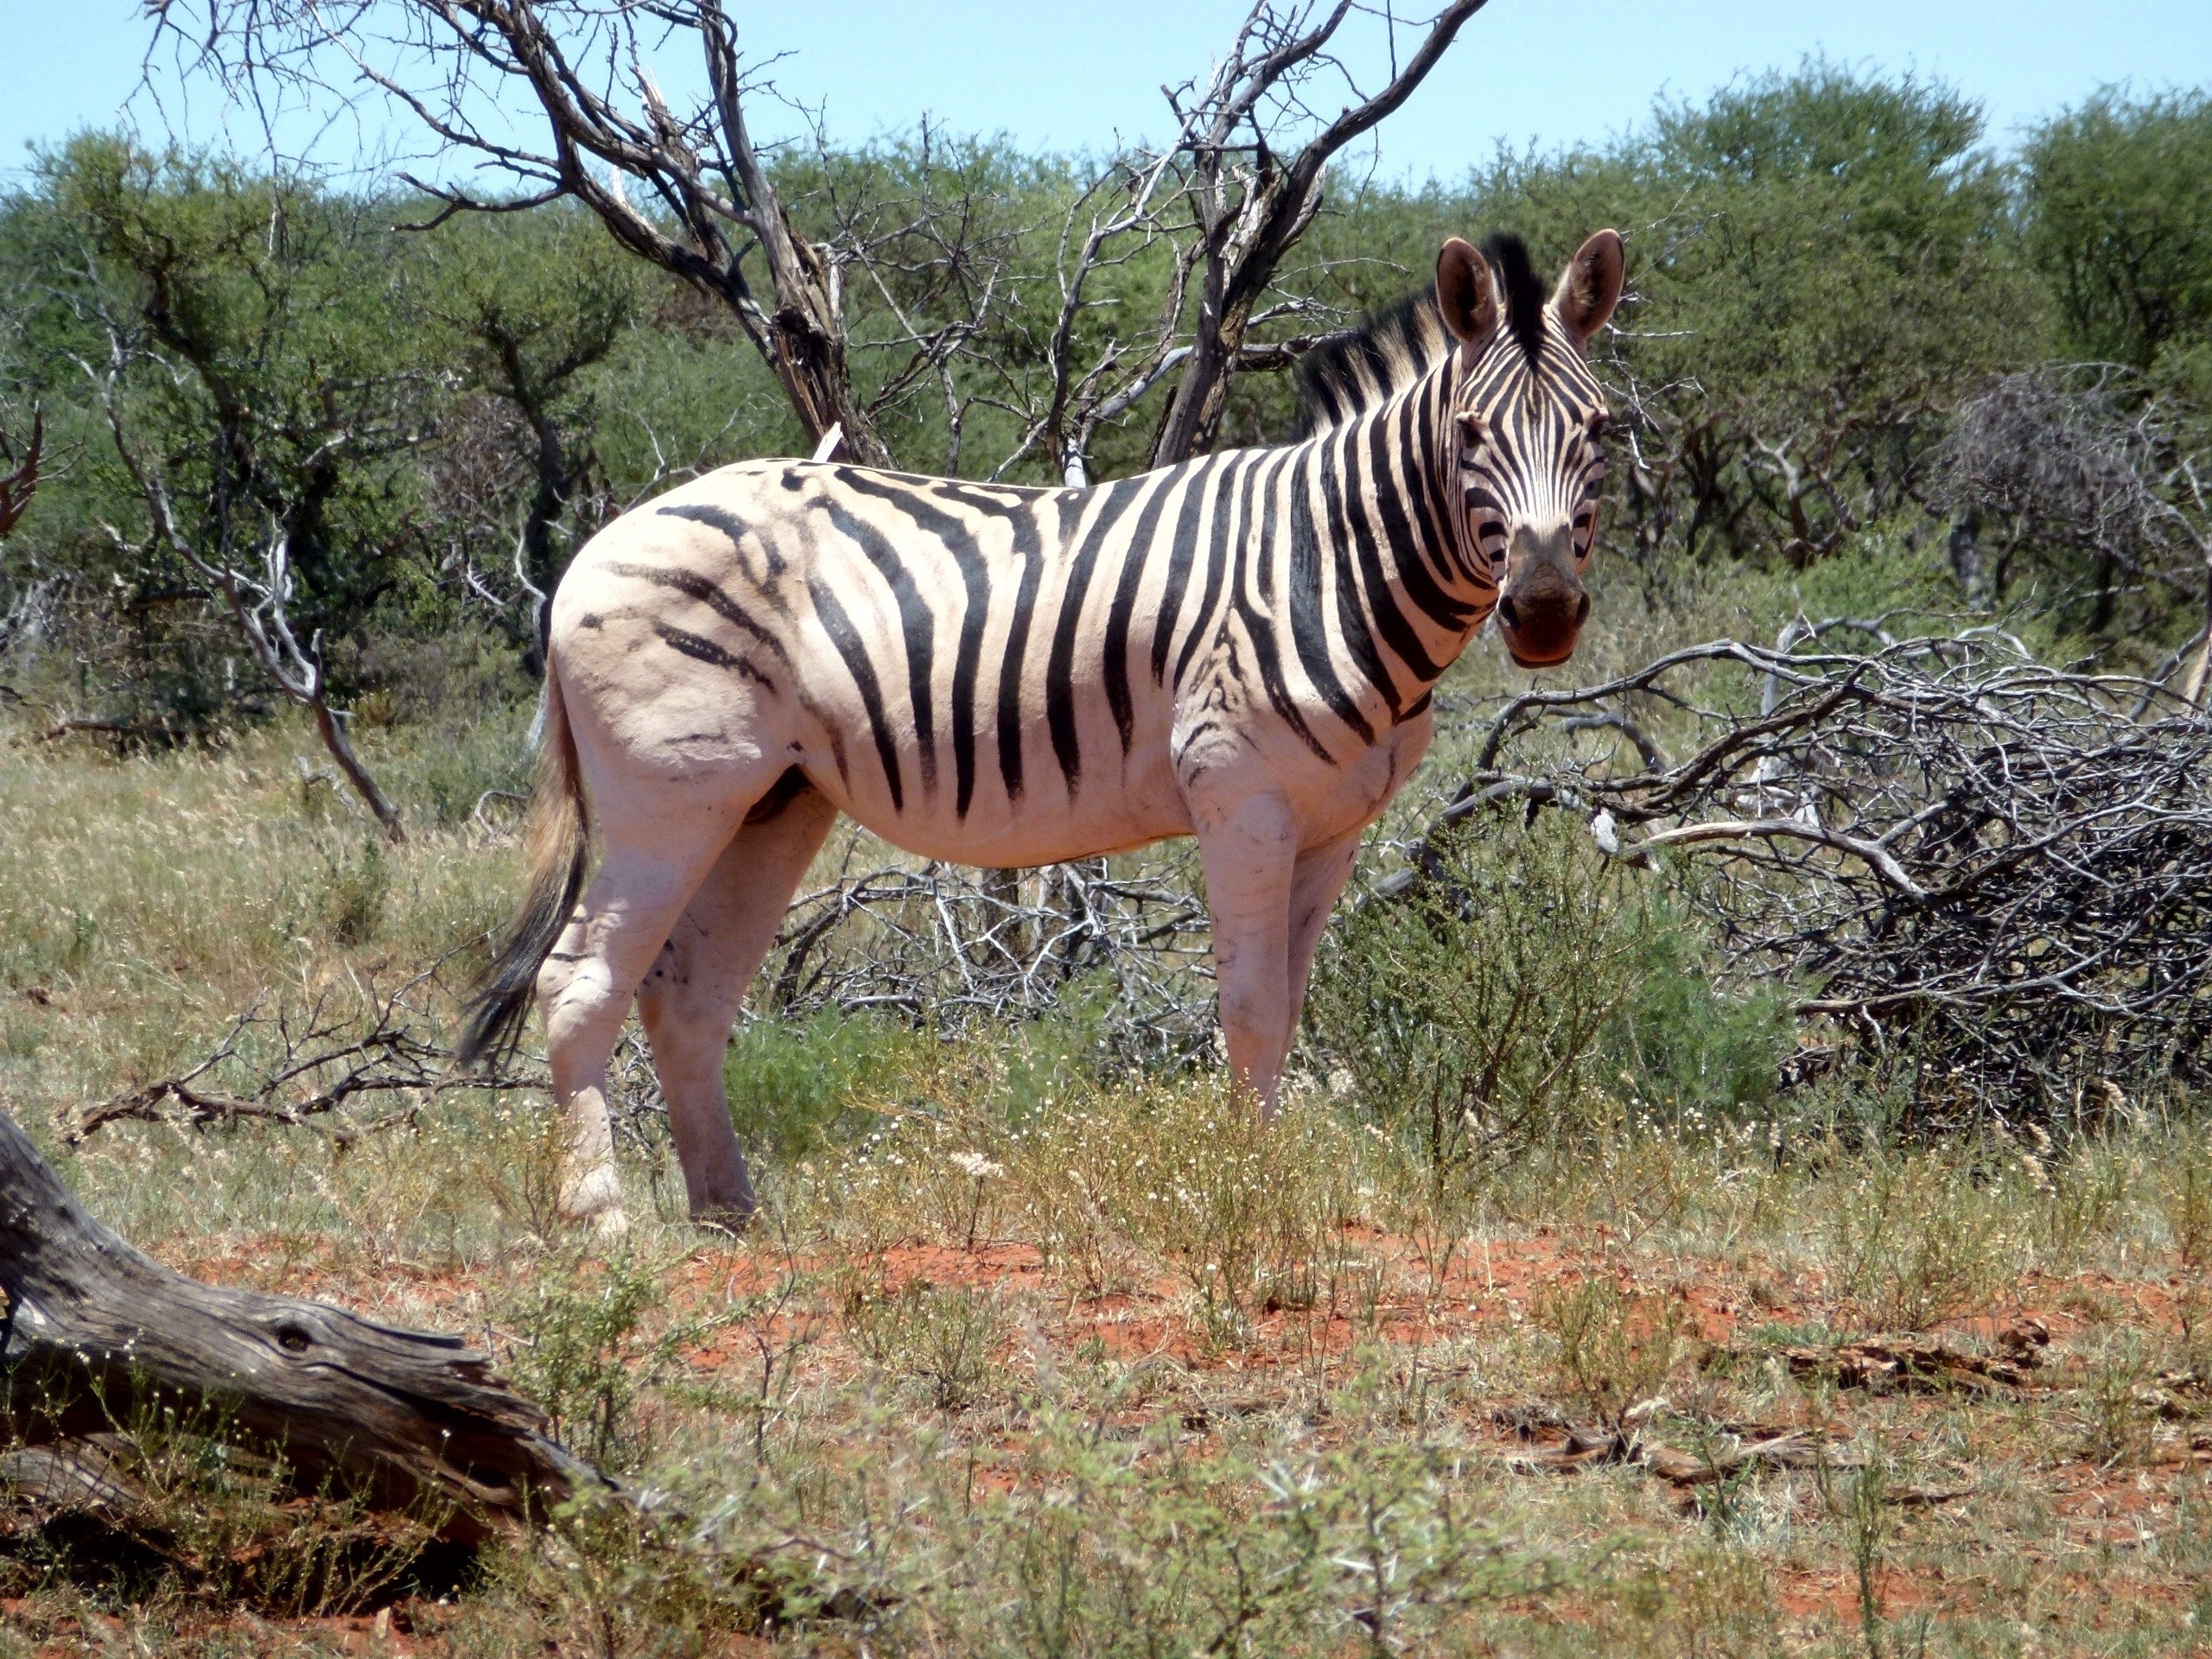 Zebra near log and bushes photo